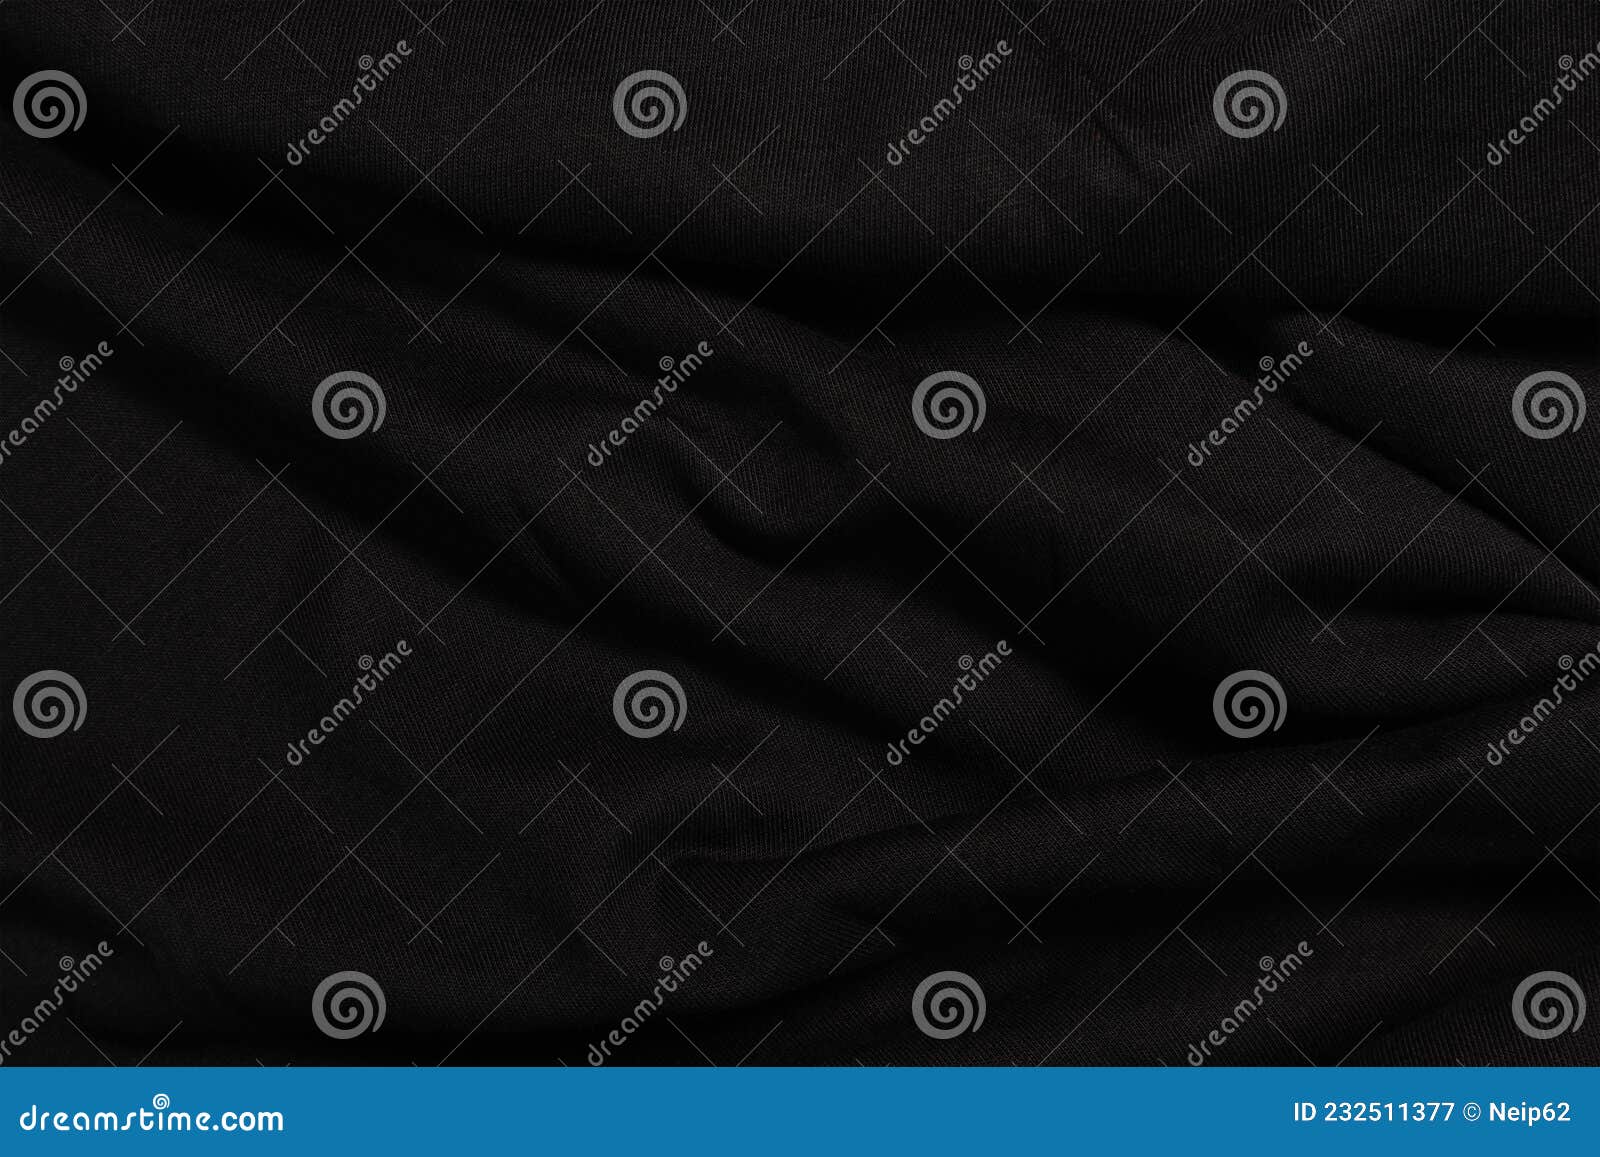 Dark Wavy Background Made of Black Fabric Texture. Low Key Stock ...